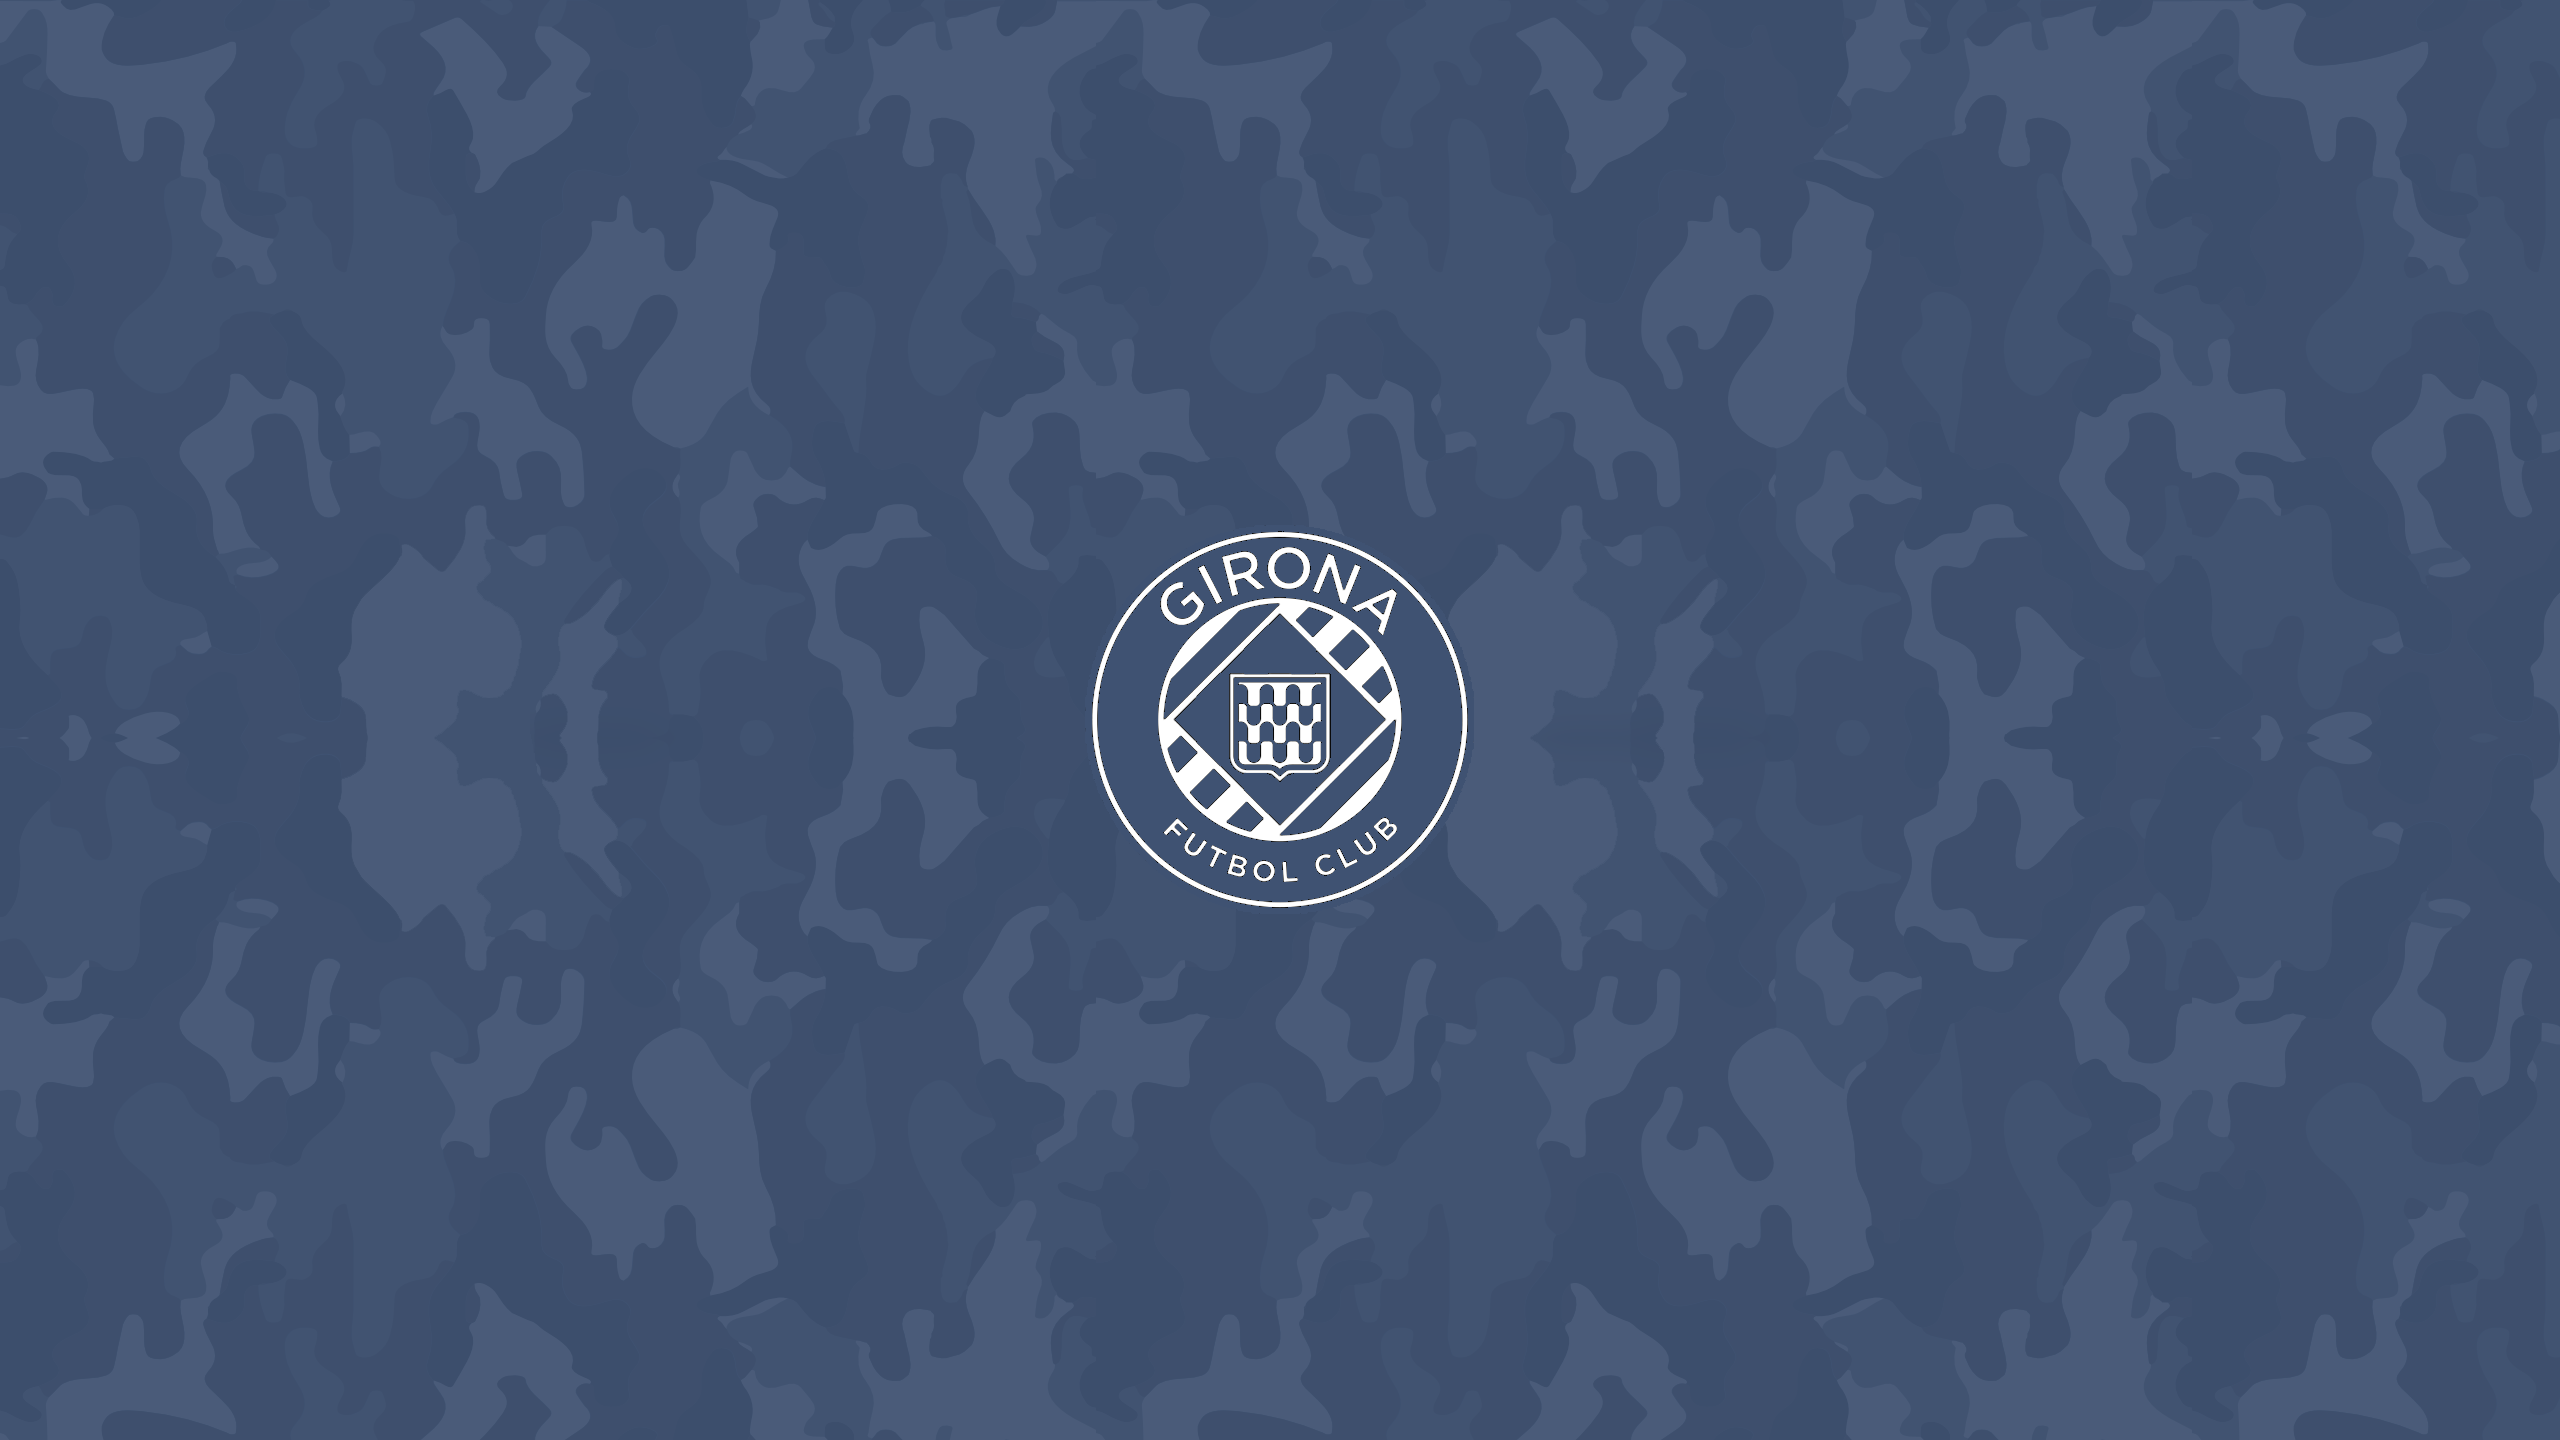 Girona FC official logo emblem displayed in vibrant HD desktop wallpaper.